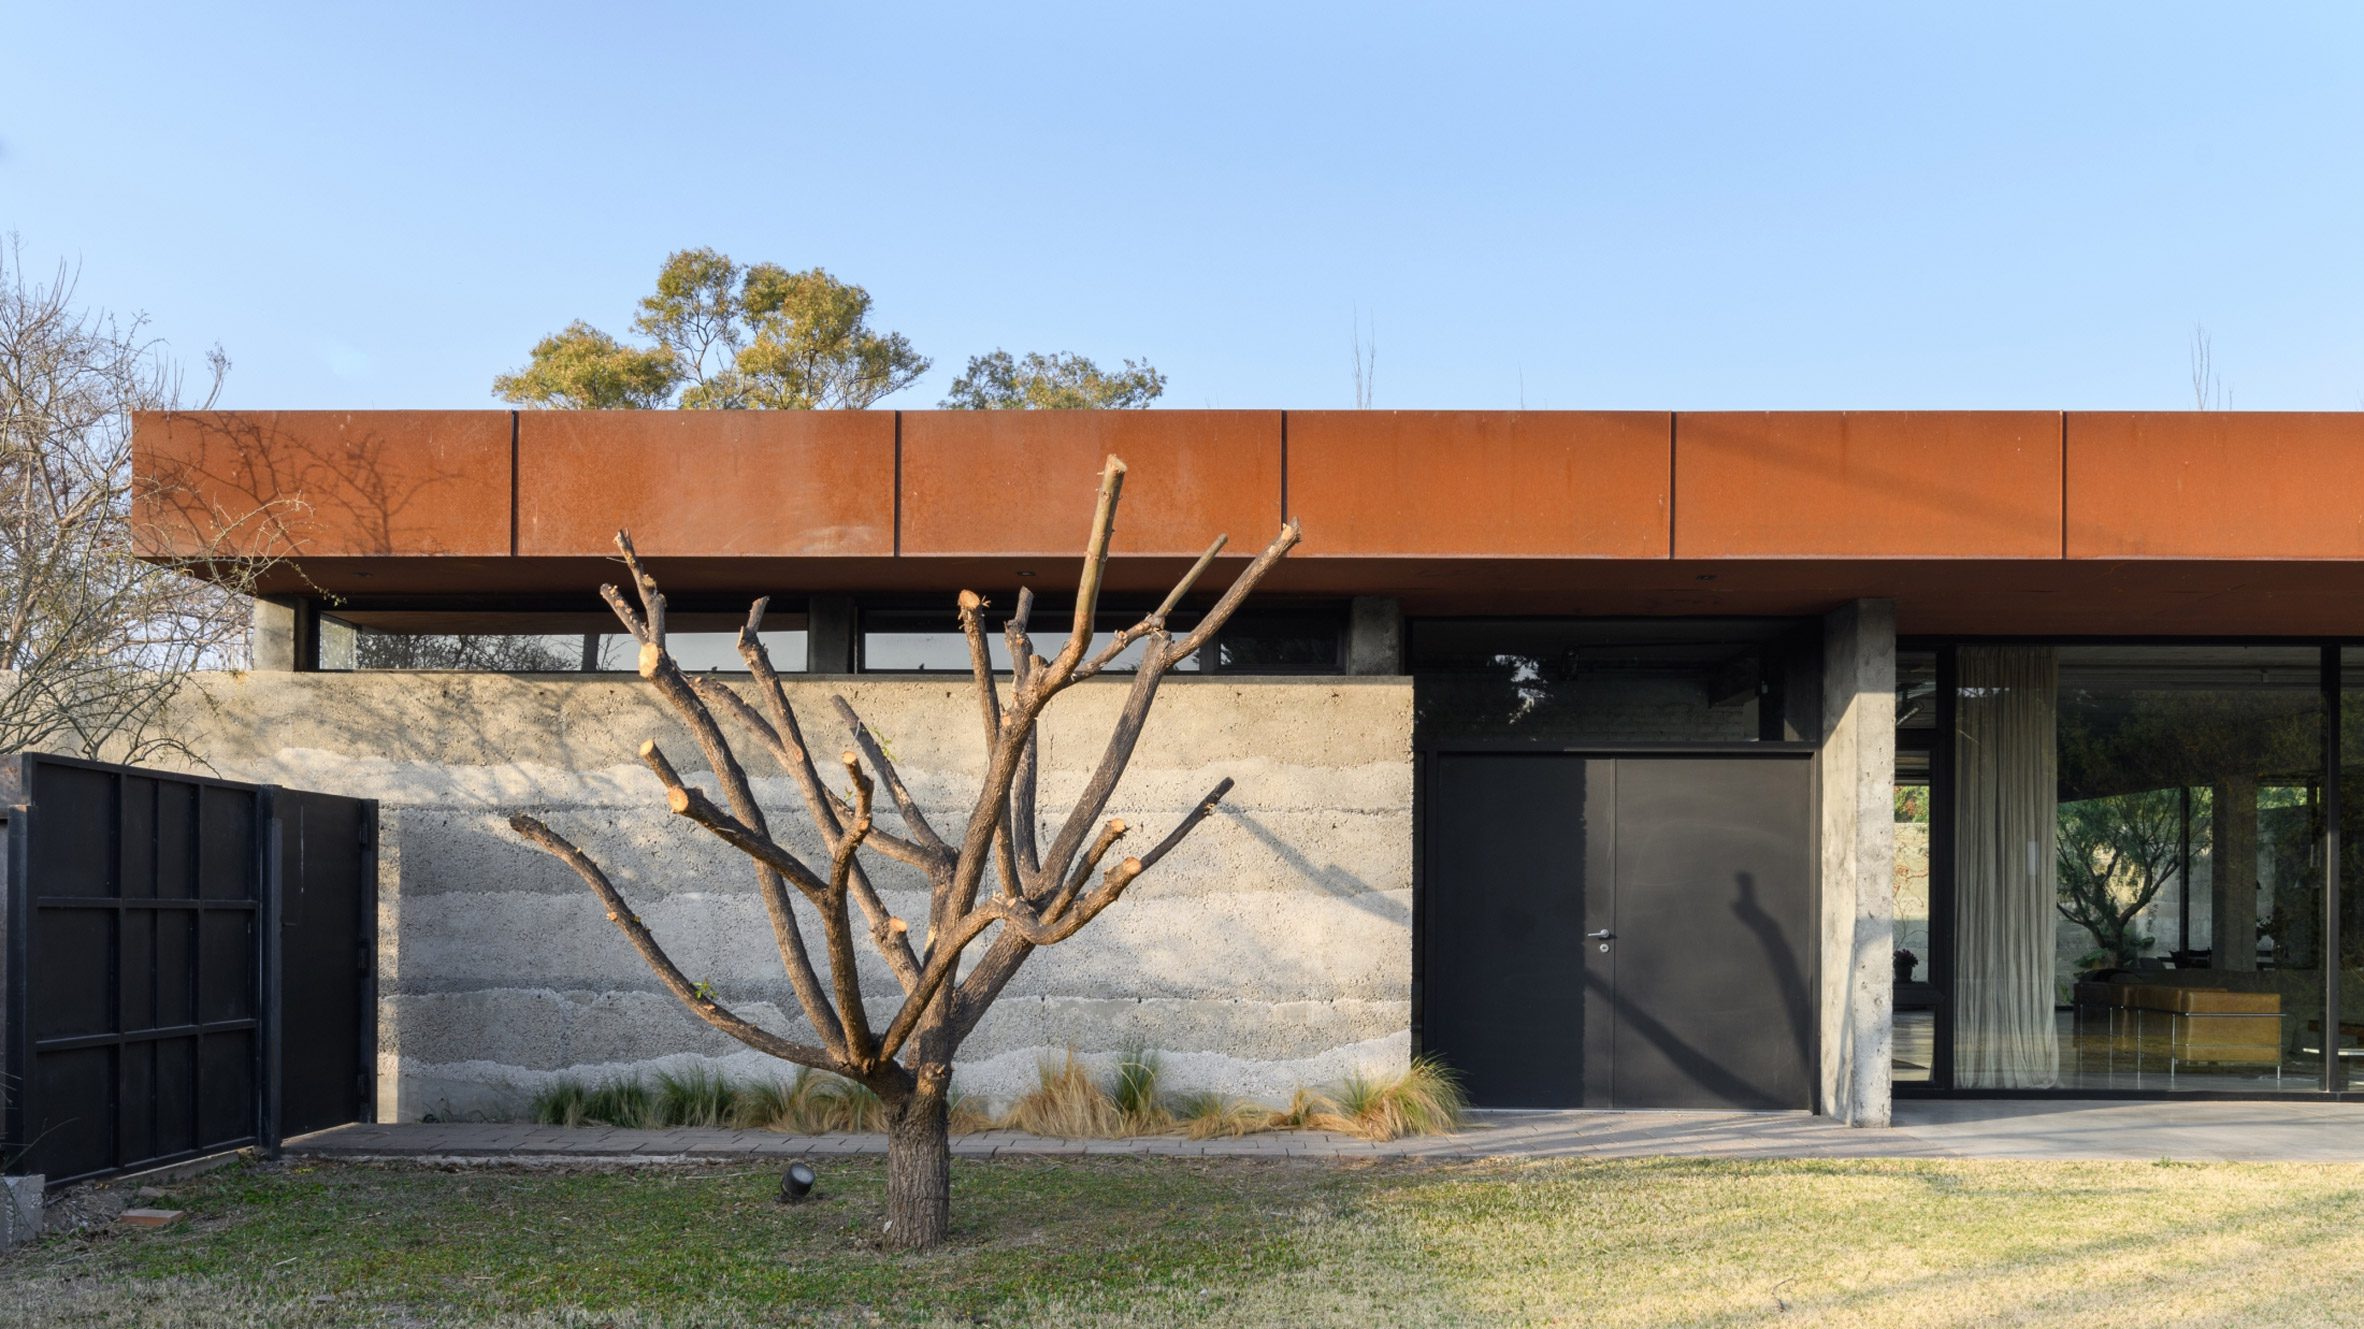 Concrete house by Roberto Benito Arquitecto